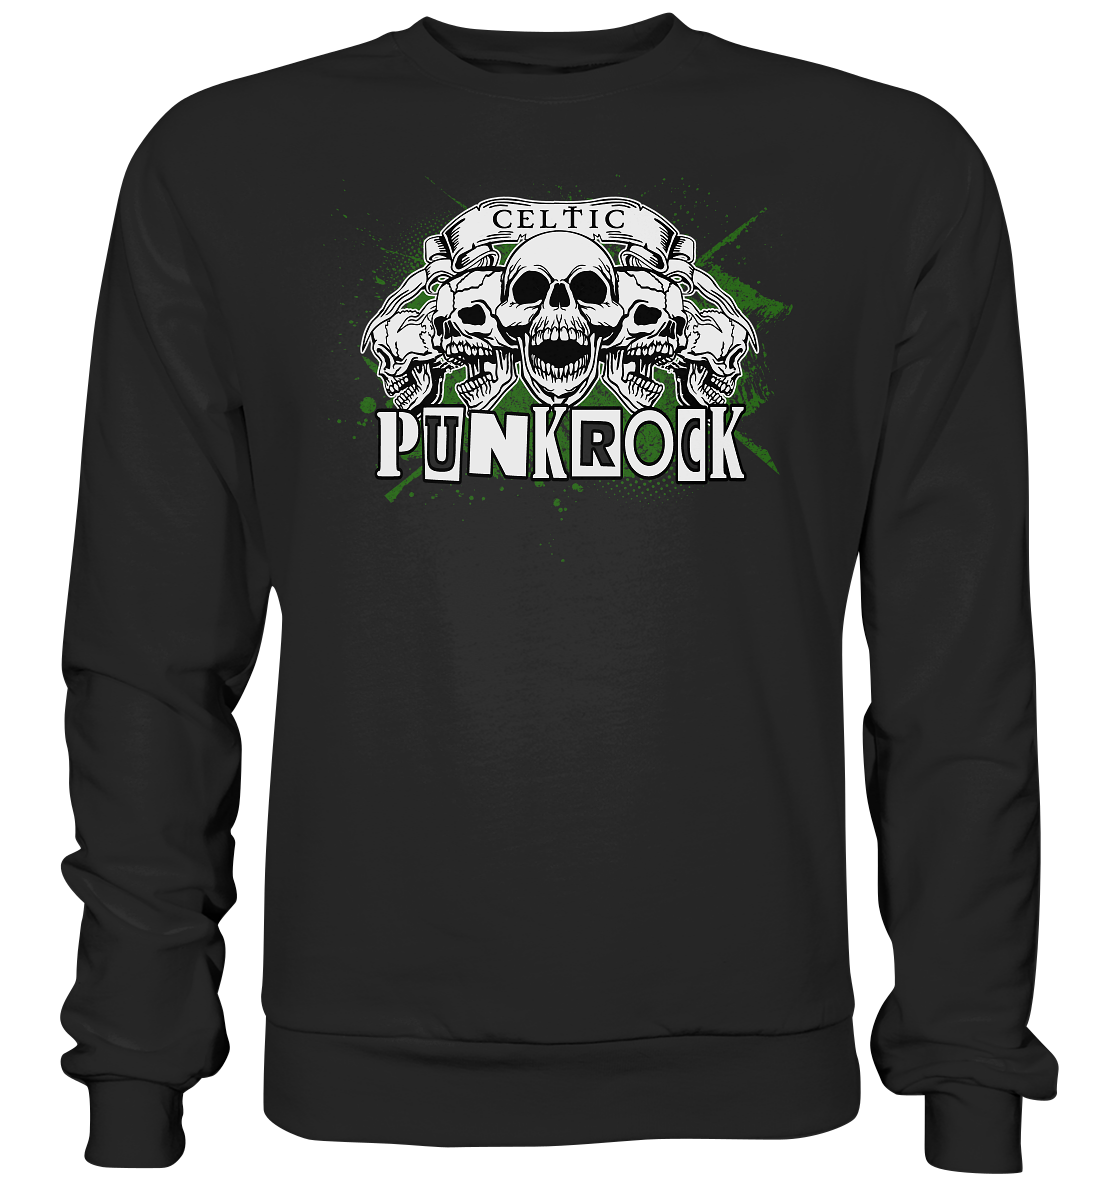 Celtic "Punkrock" - Premium Sweatshirt